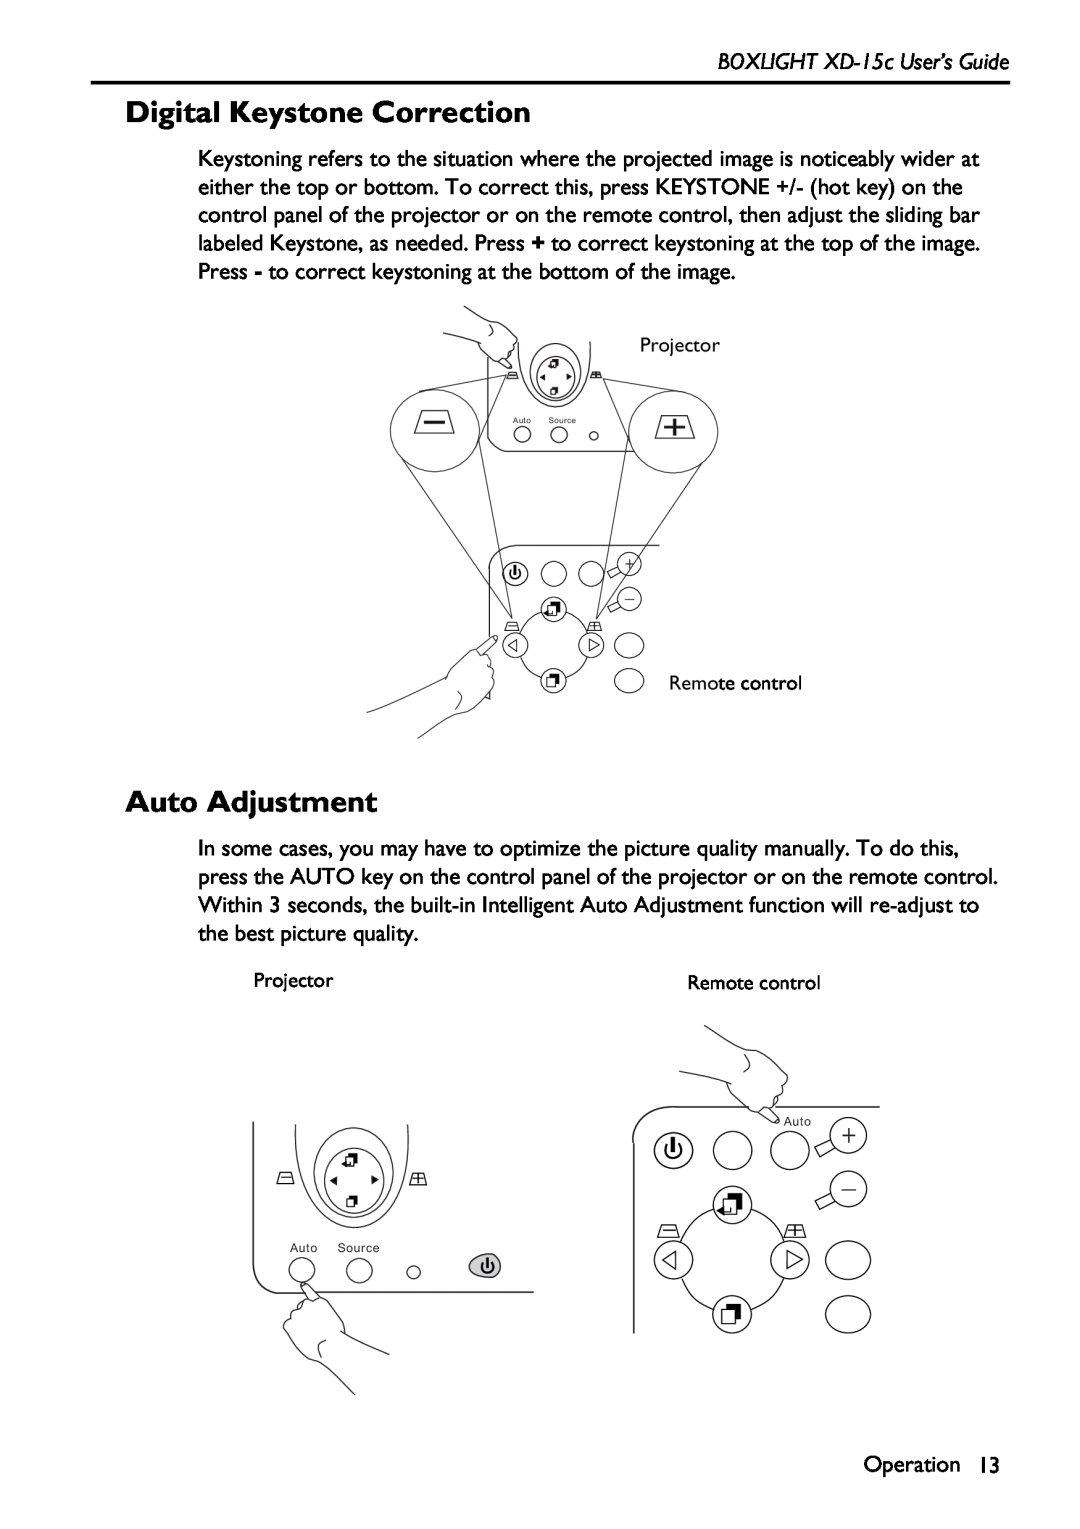 BOXLIGHT manual Digital Keystone Correction, Auto Adjustment, BOXLIGHT XD-15c User’s Guide 